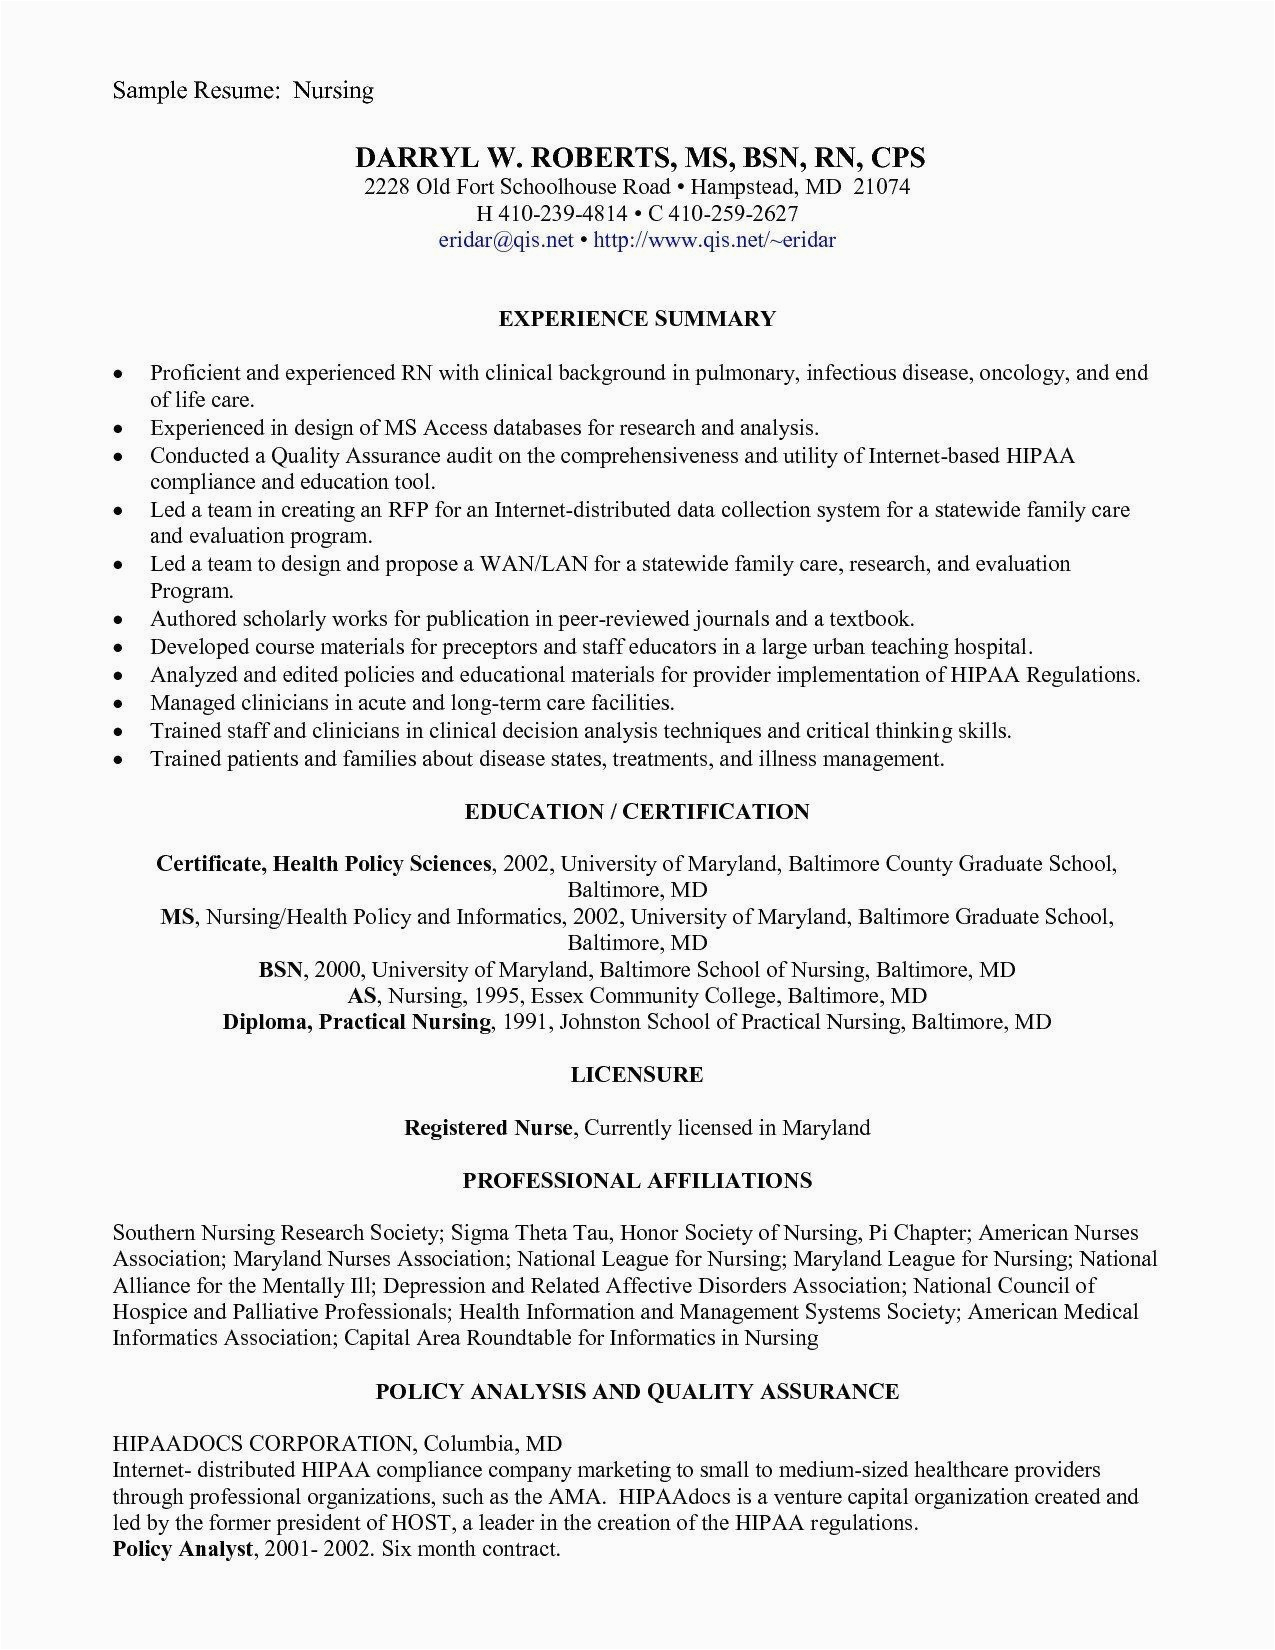 Sample Resume for Registered Nurse with No Experience 32 Elegant New Graduate Nurse Resume In 2020